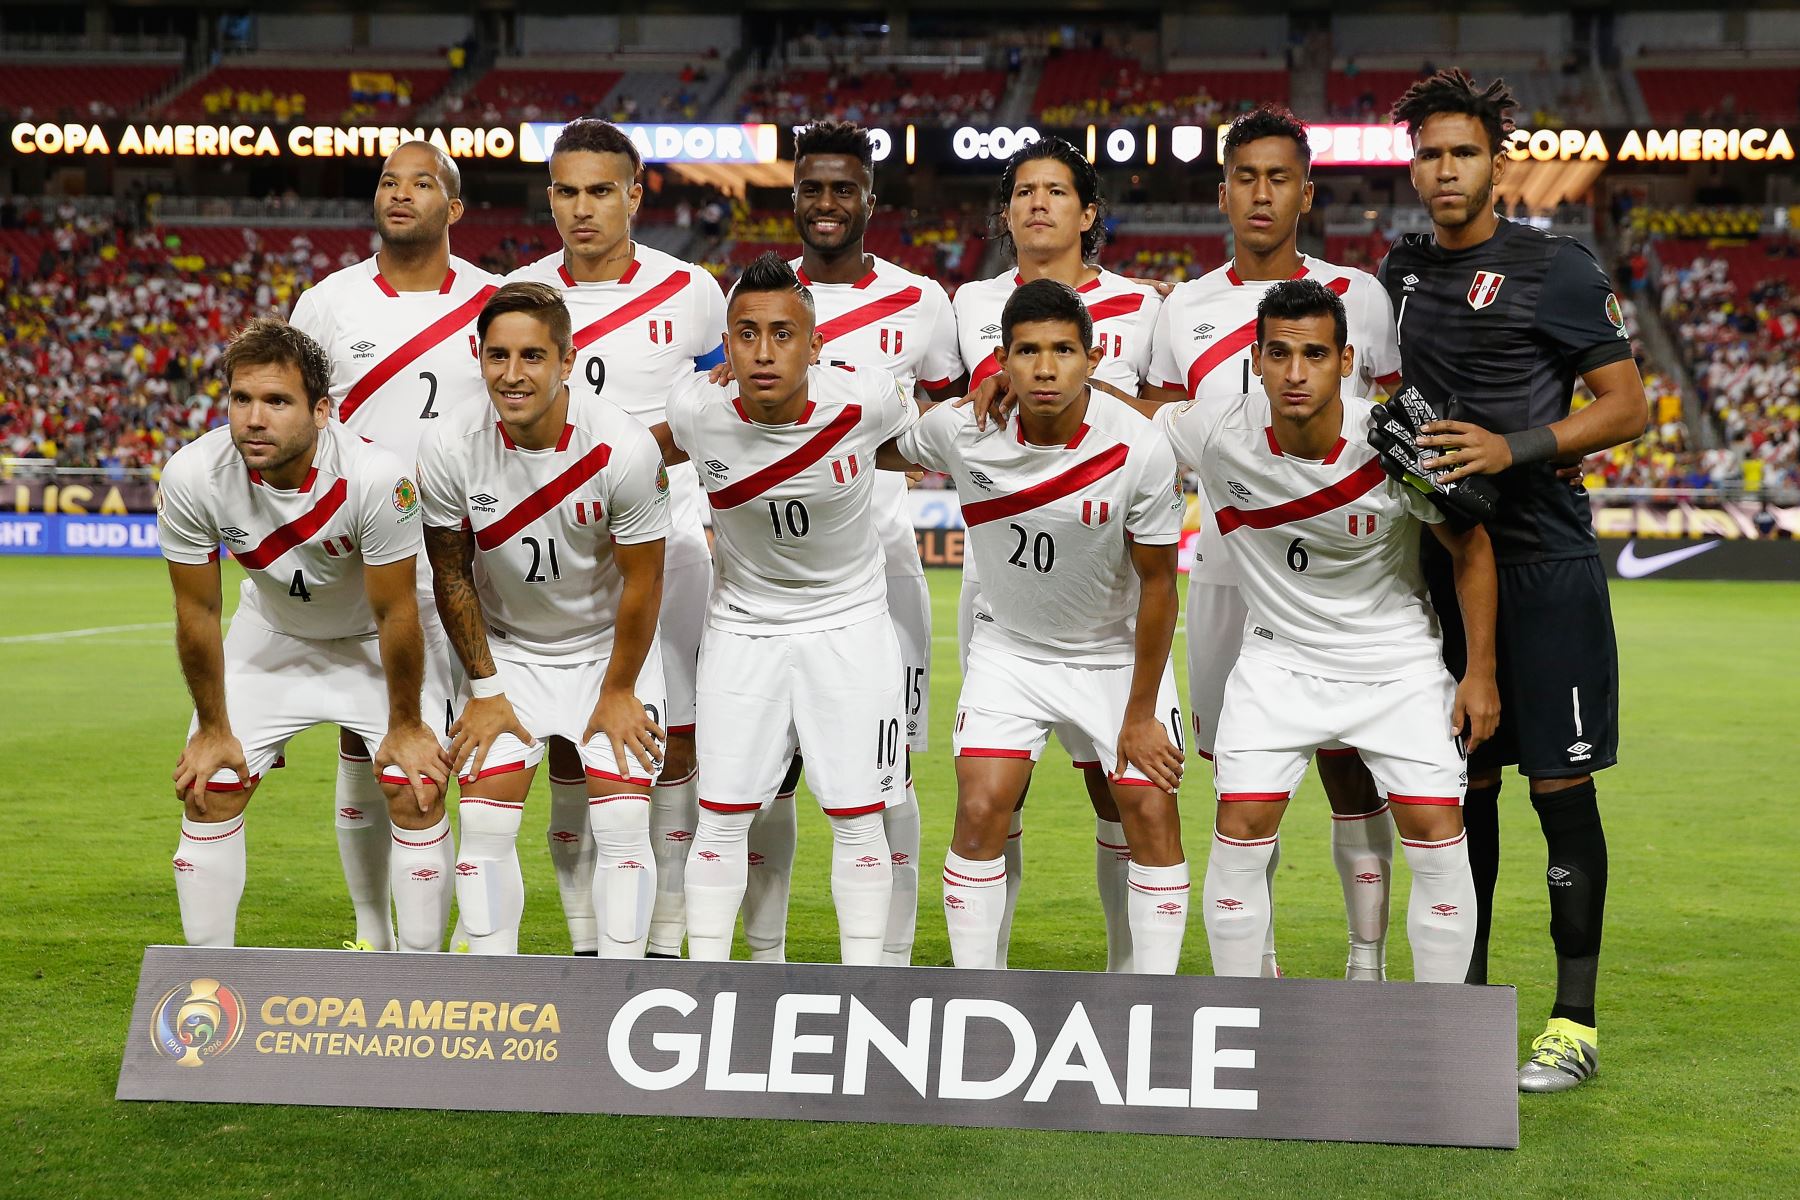 Peru S Soccer Team Rose 14 Spots In Latest Fifa Ranking News Andina Peru News Agency